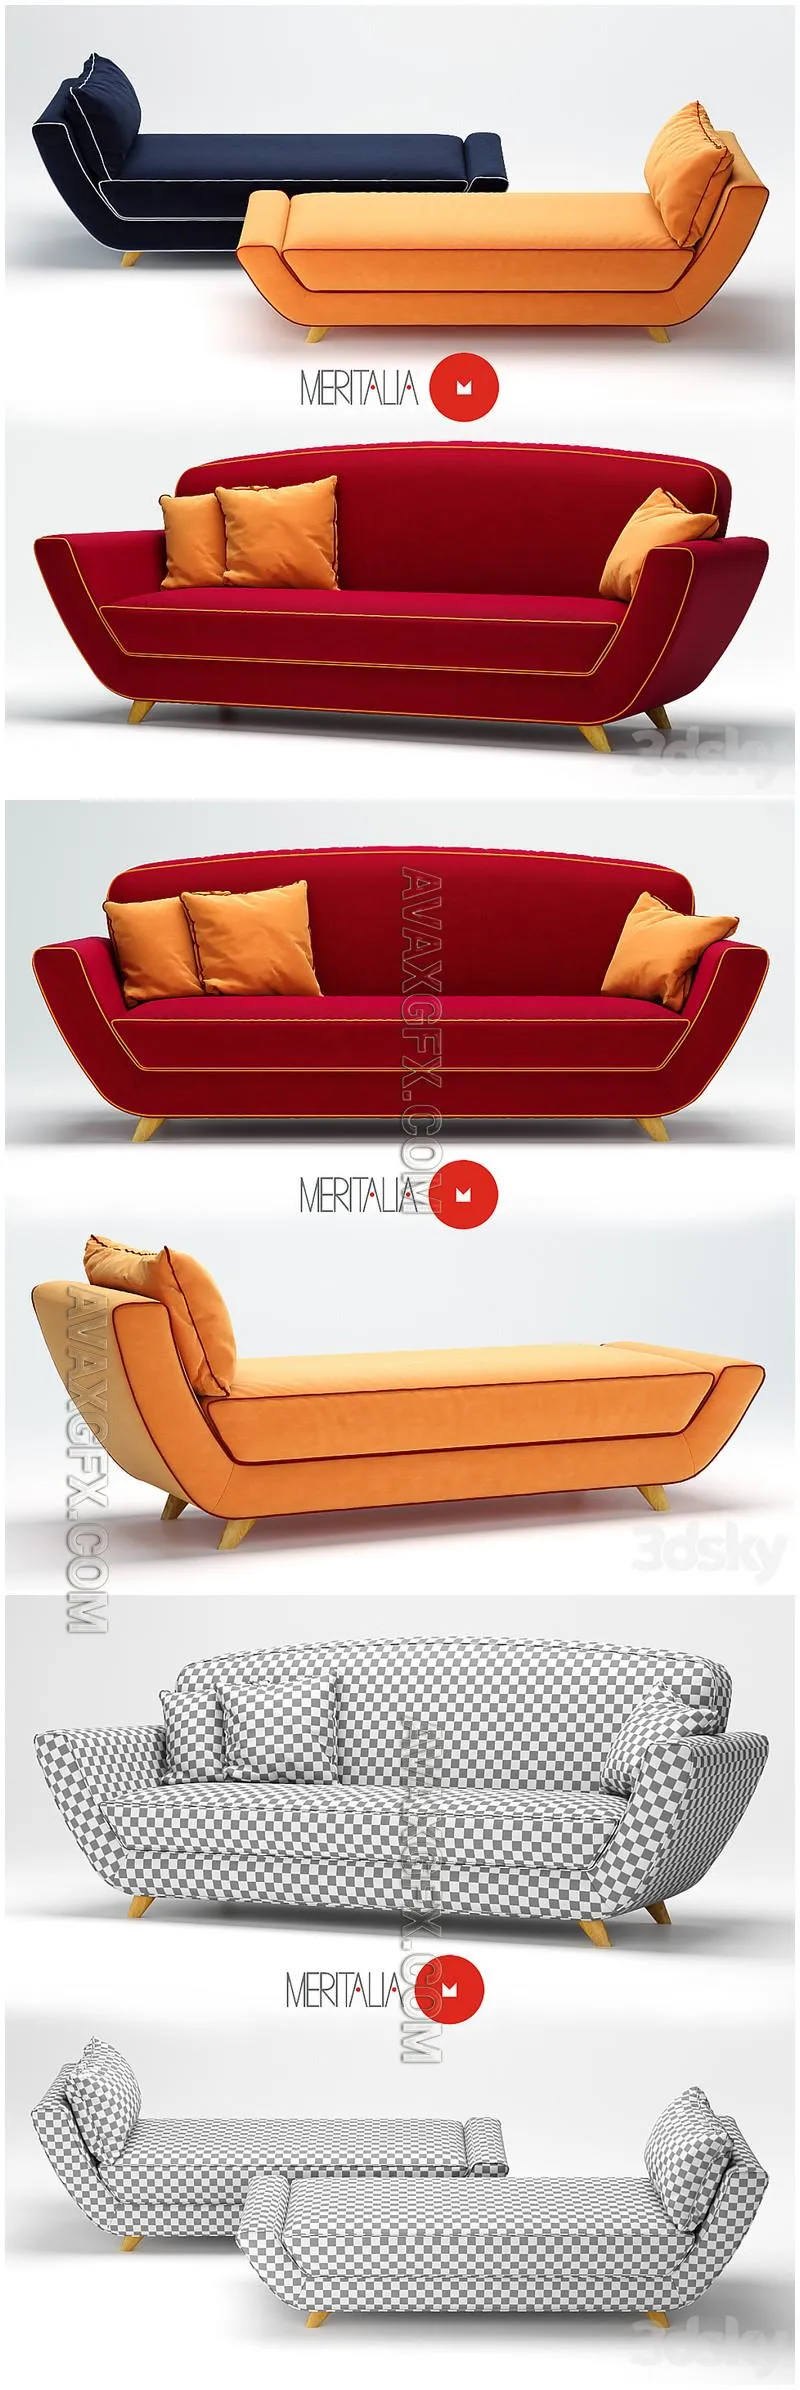 A sofa and chaise longue by Minah Meritalia - 3D Model